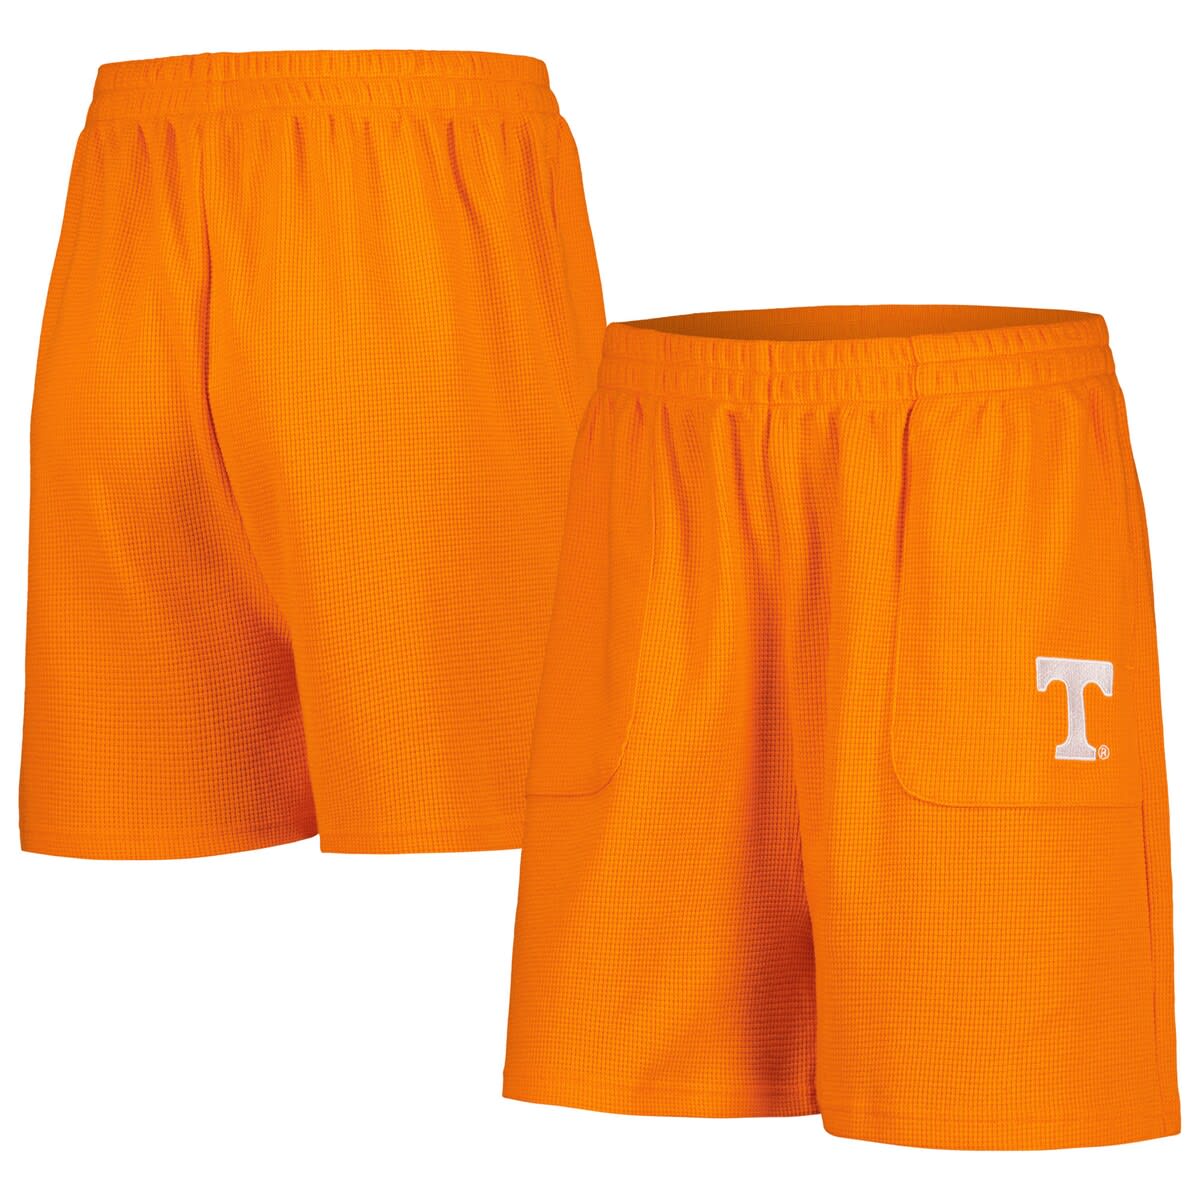 Tennessee Volunteers basketball shorts